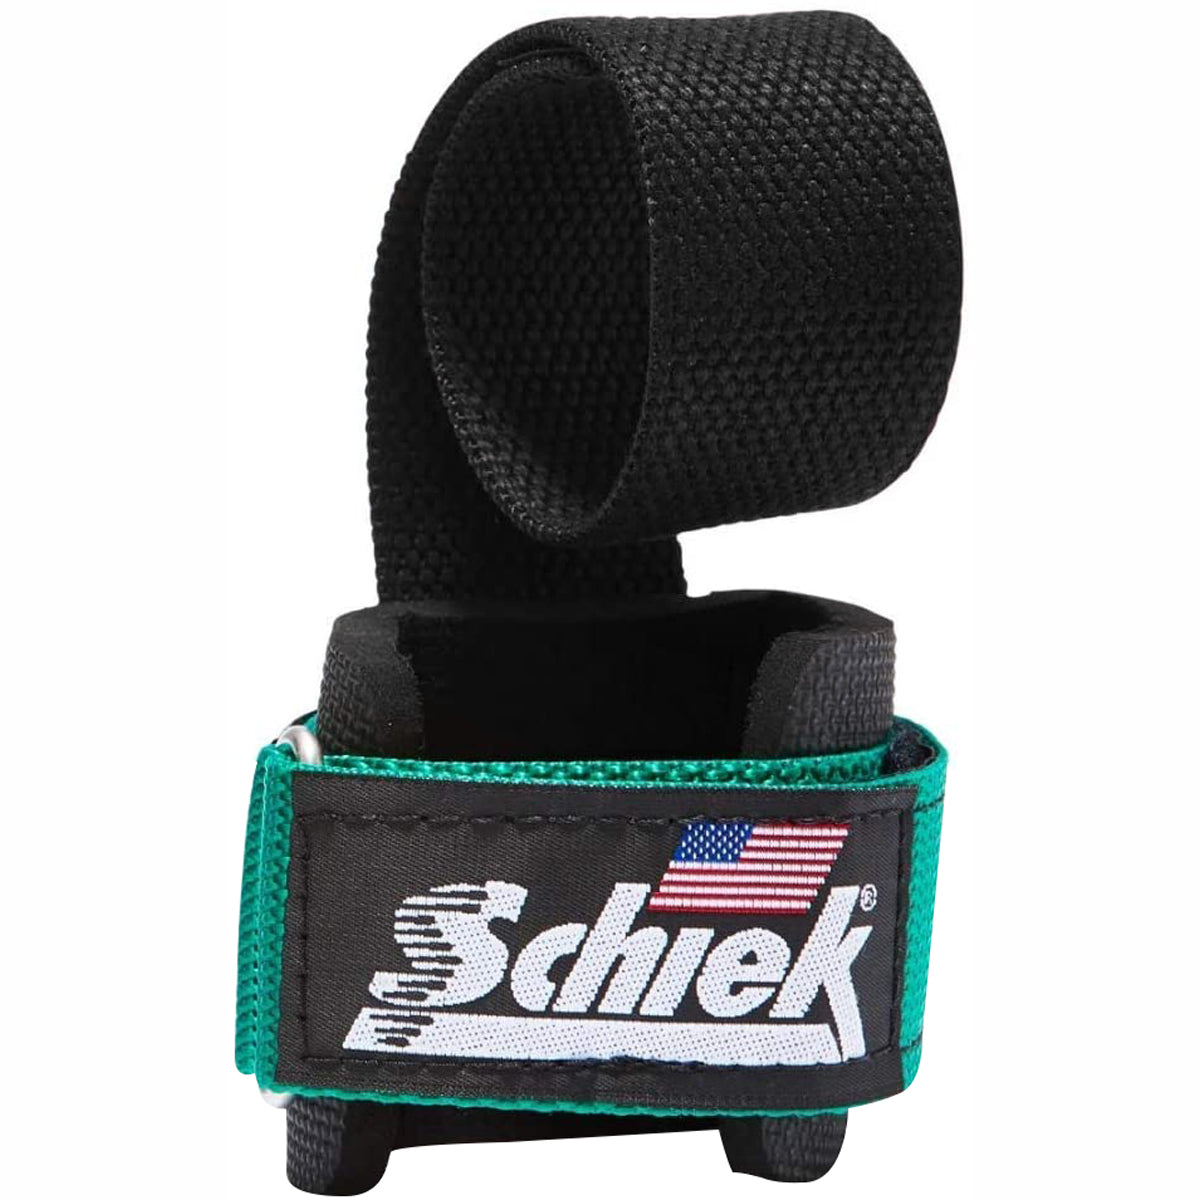 Schiek Sports Model 1000-PLS Deluxe Power Lifting Straps - Green Schiek Sports